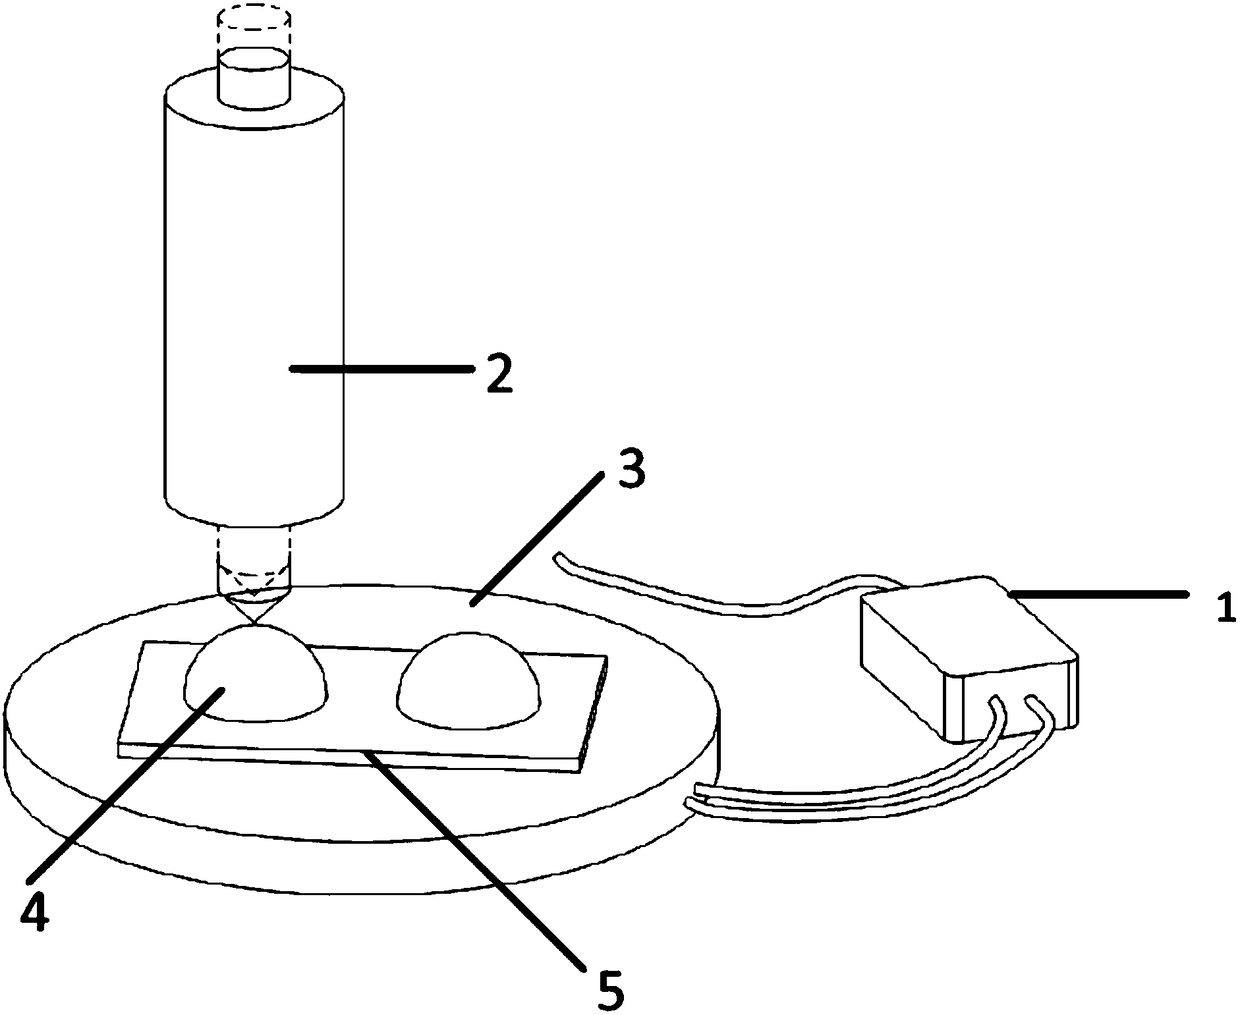 Liquid surface tension testing method based on mechanical vibration of liquid droplet